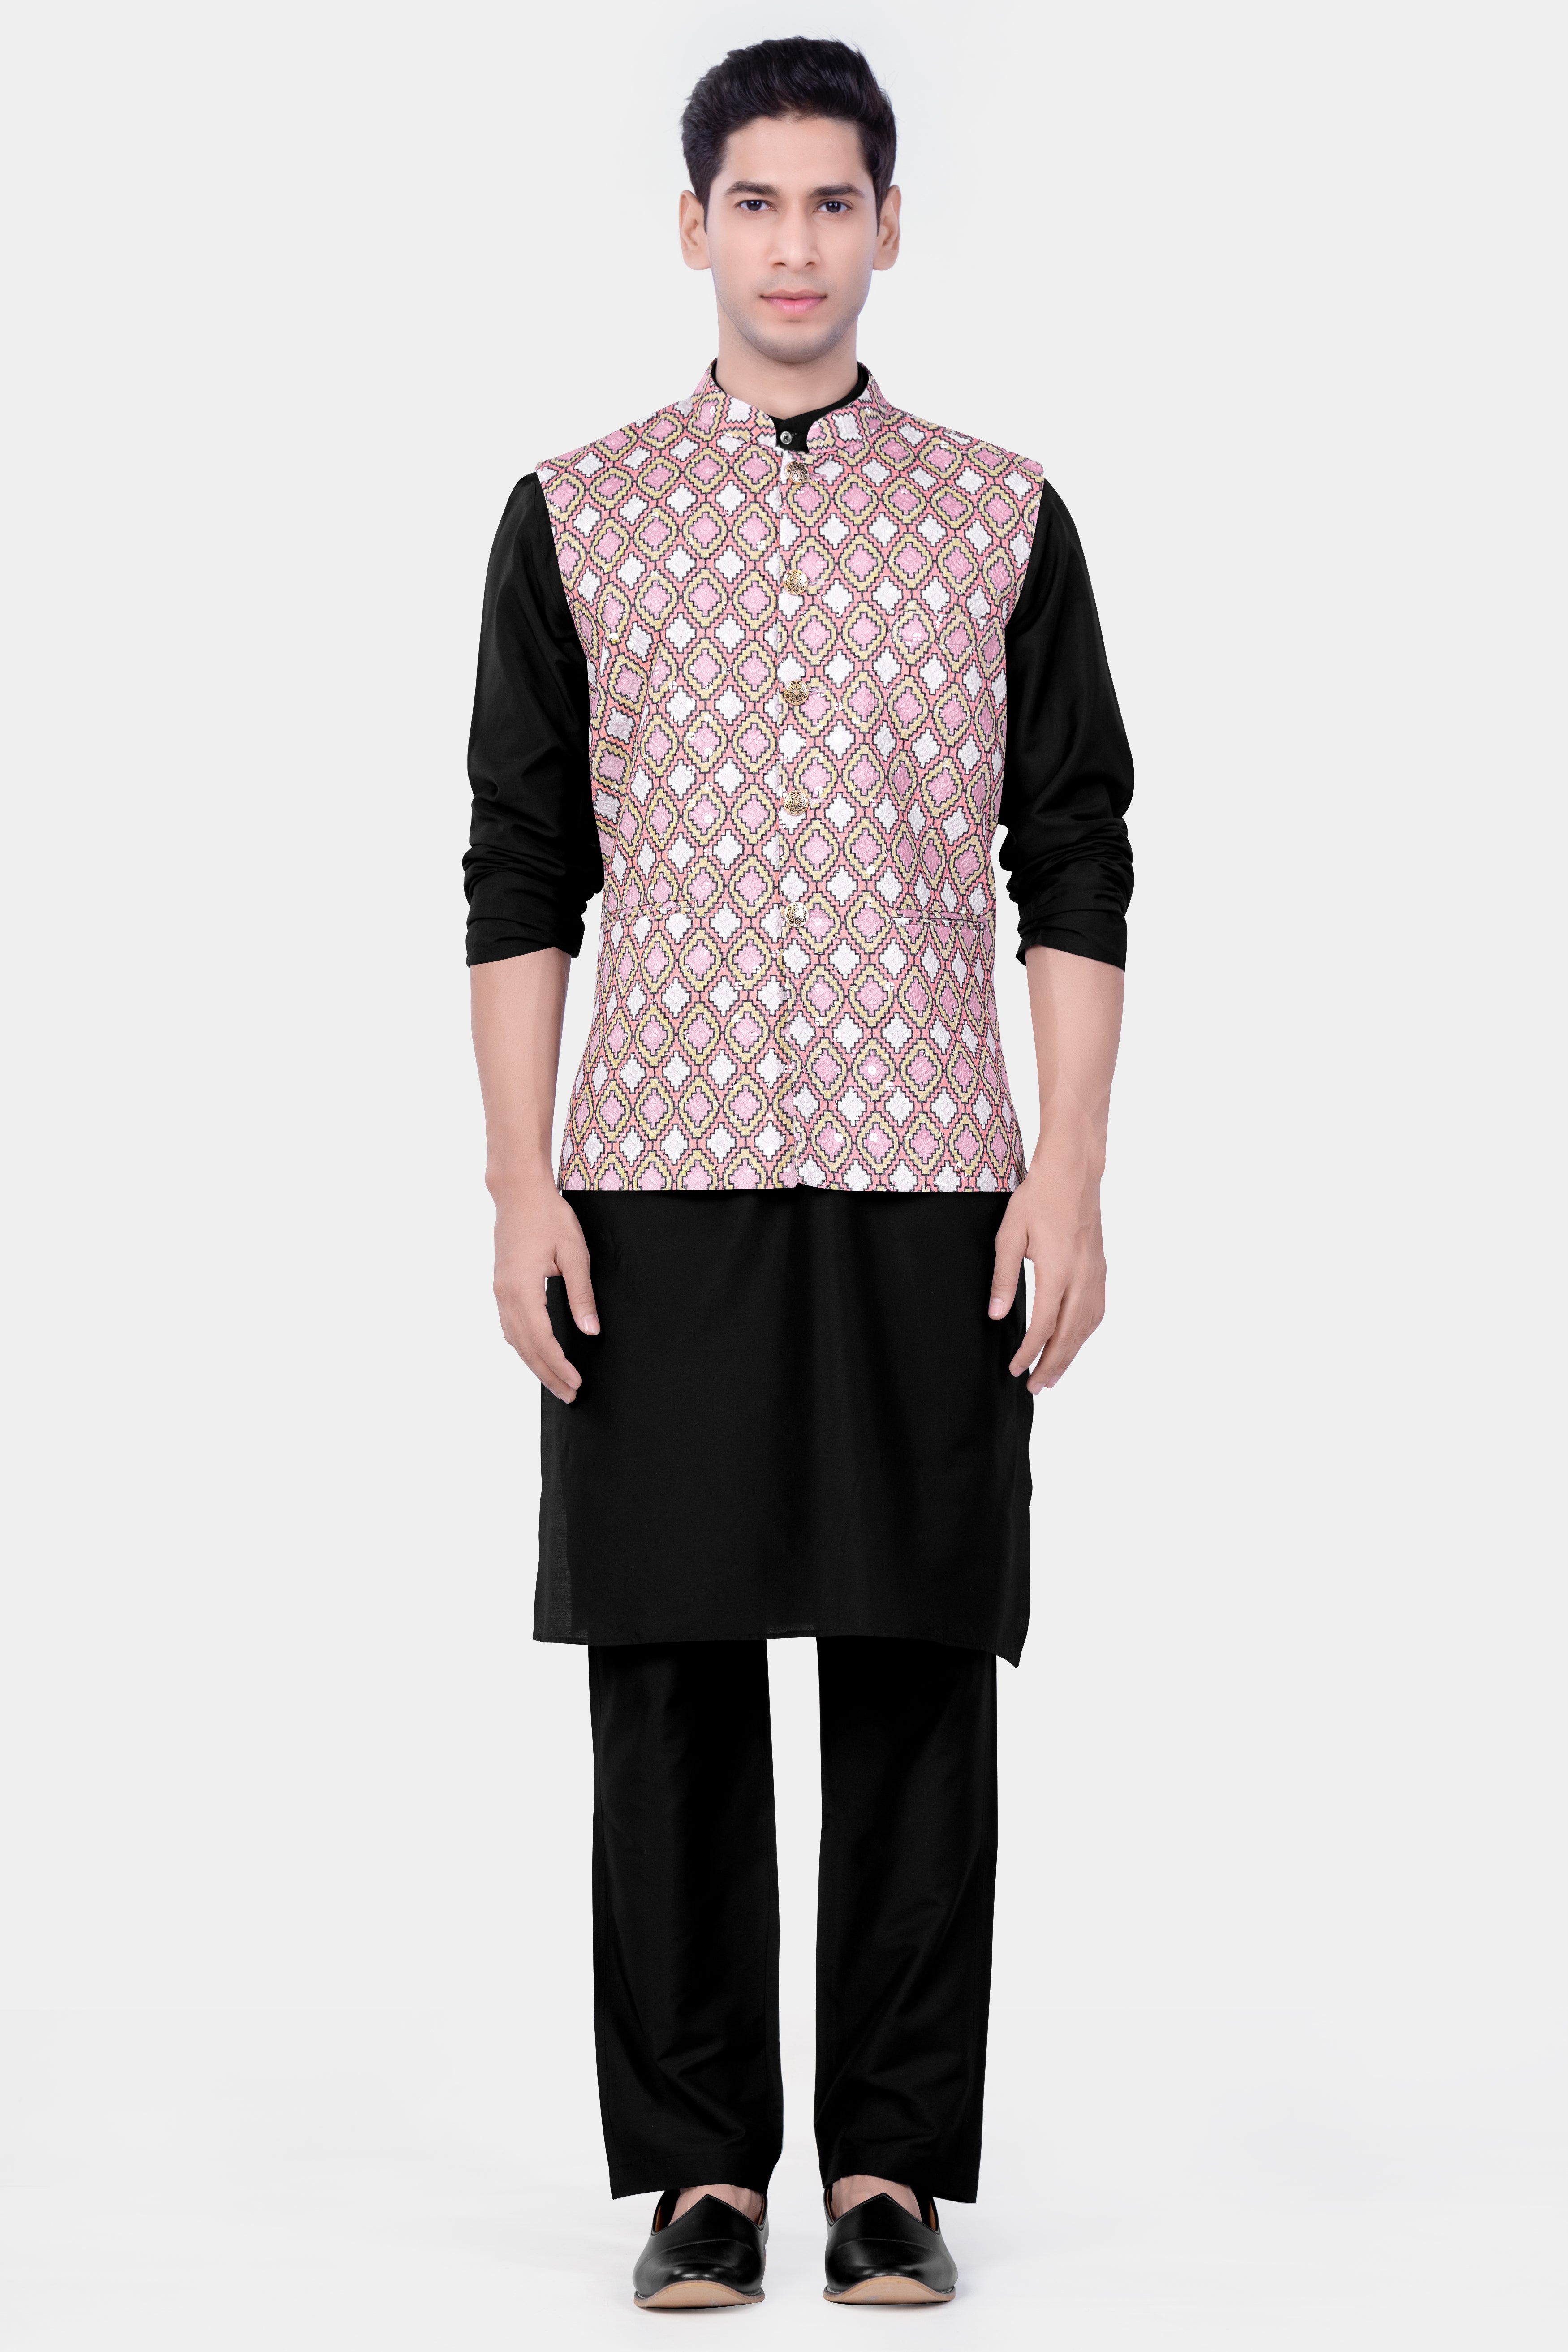 Azalea Pink And Astra Yellow MultiColour Designer Embroidered Nehru Jacket